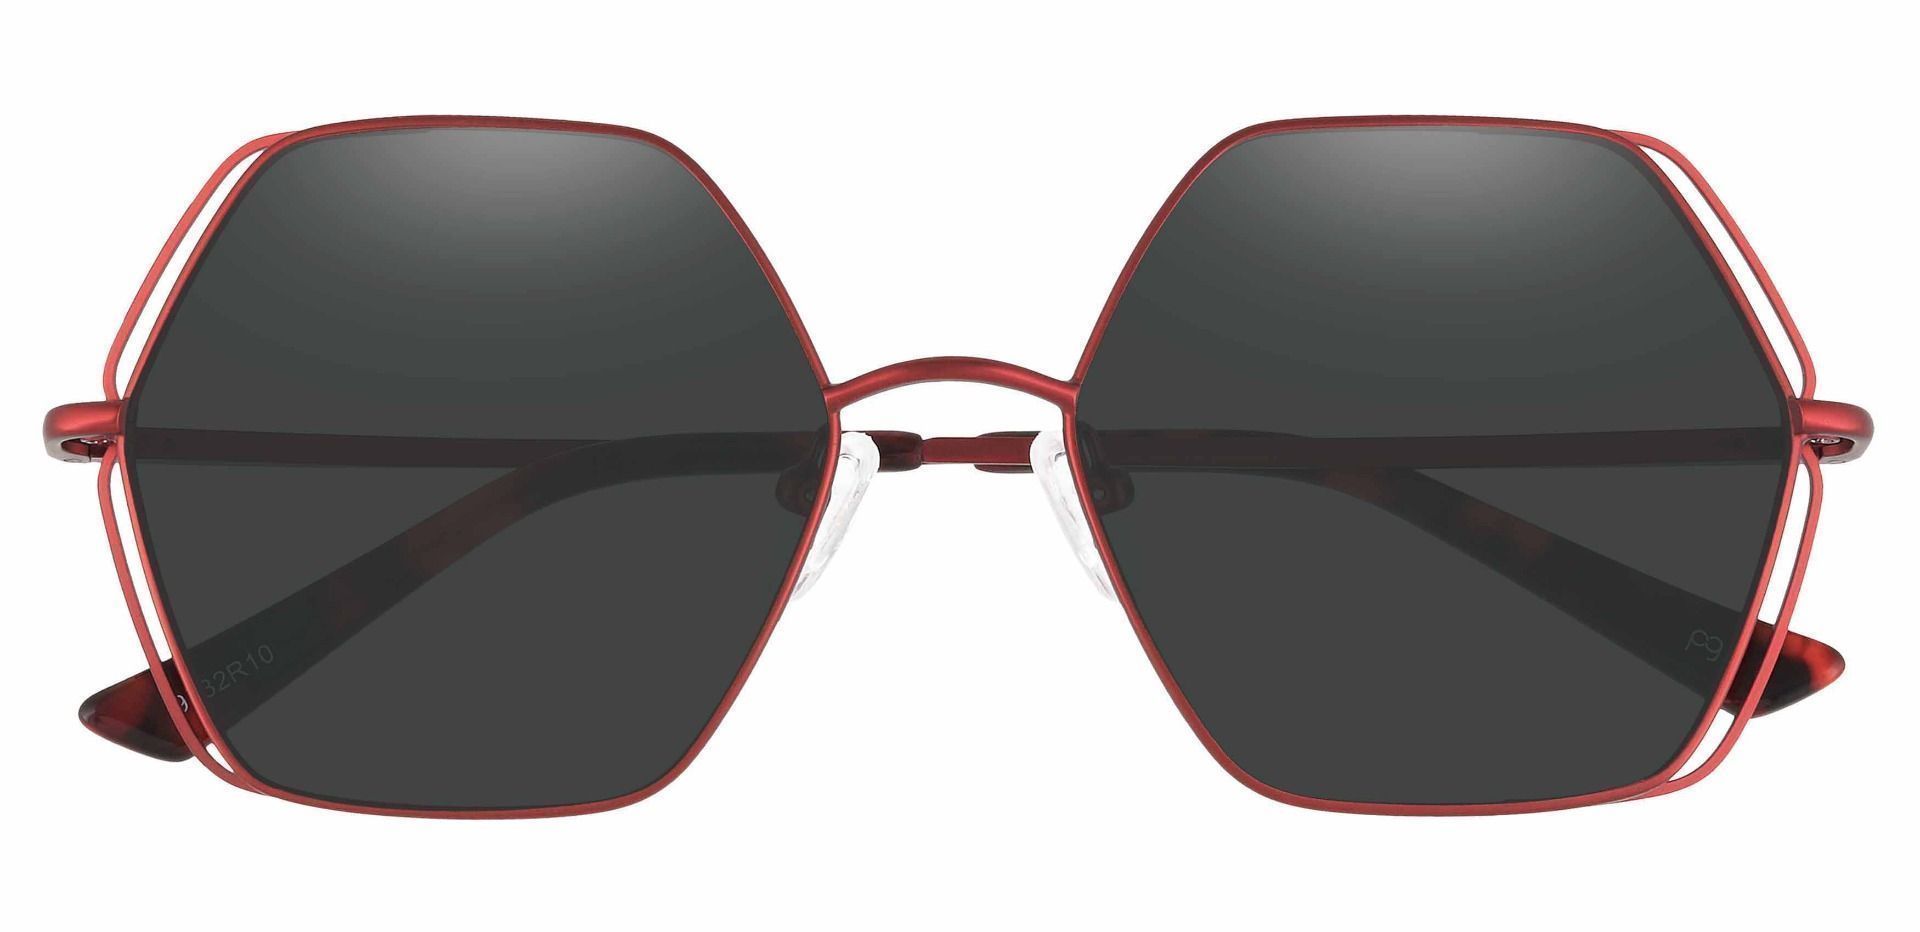 Hawley Geometric Prescription Sunglasses - Red Frame With Gray Lenses